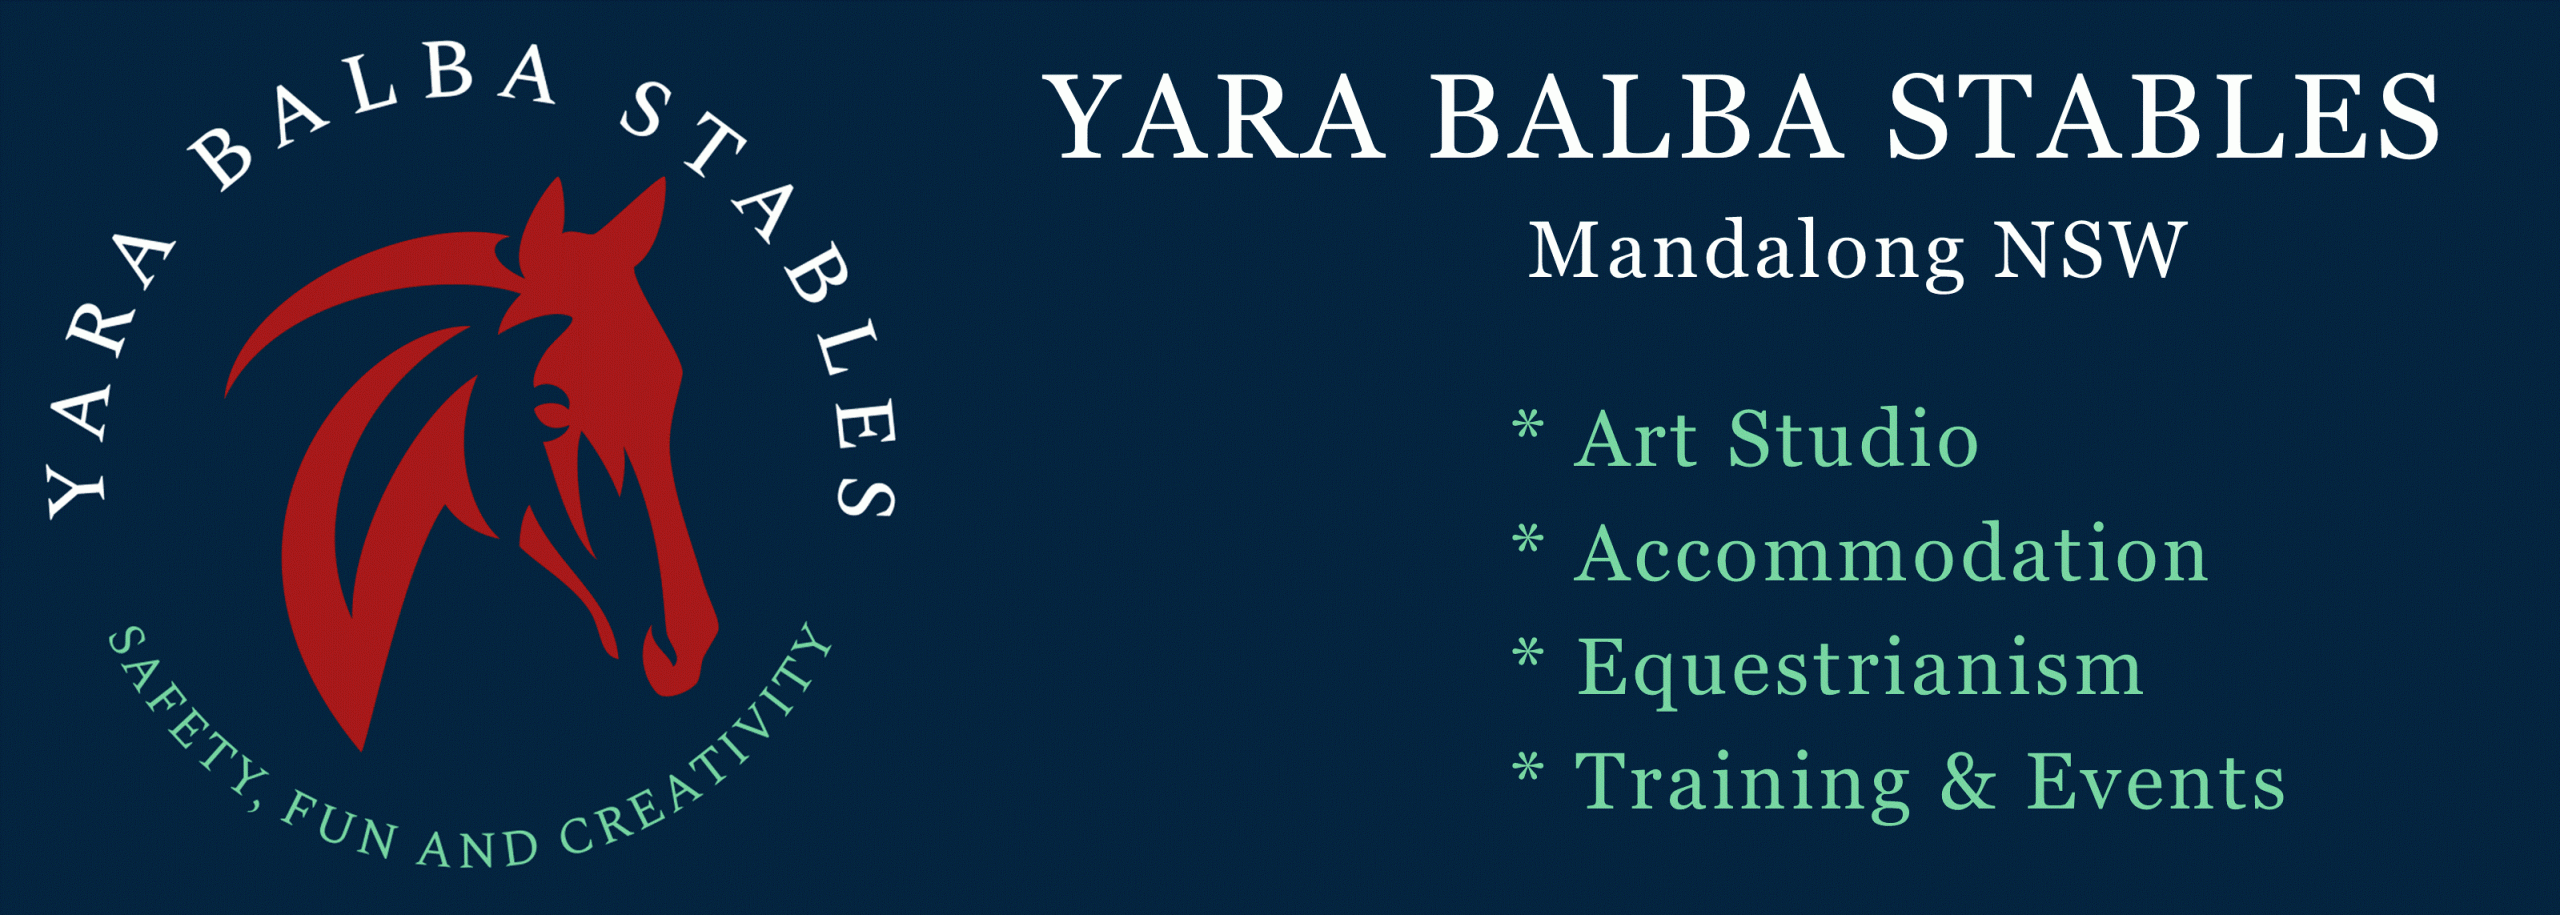 Yara Balba Studios